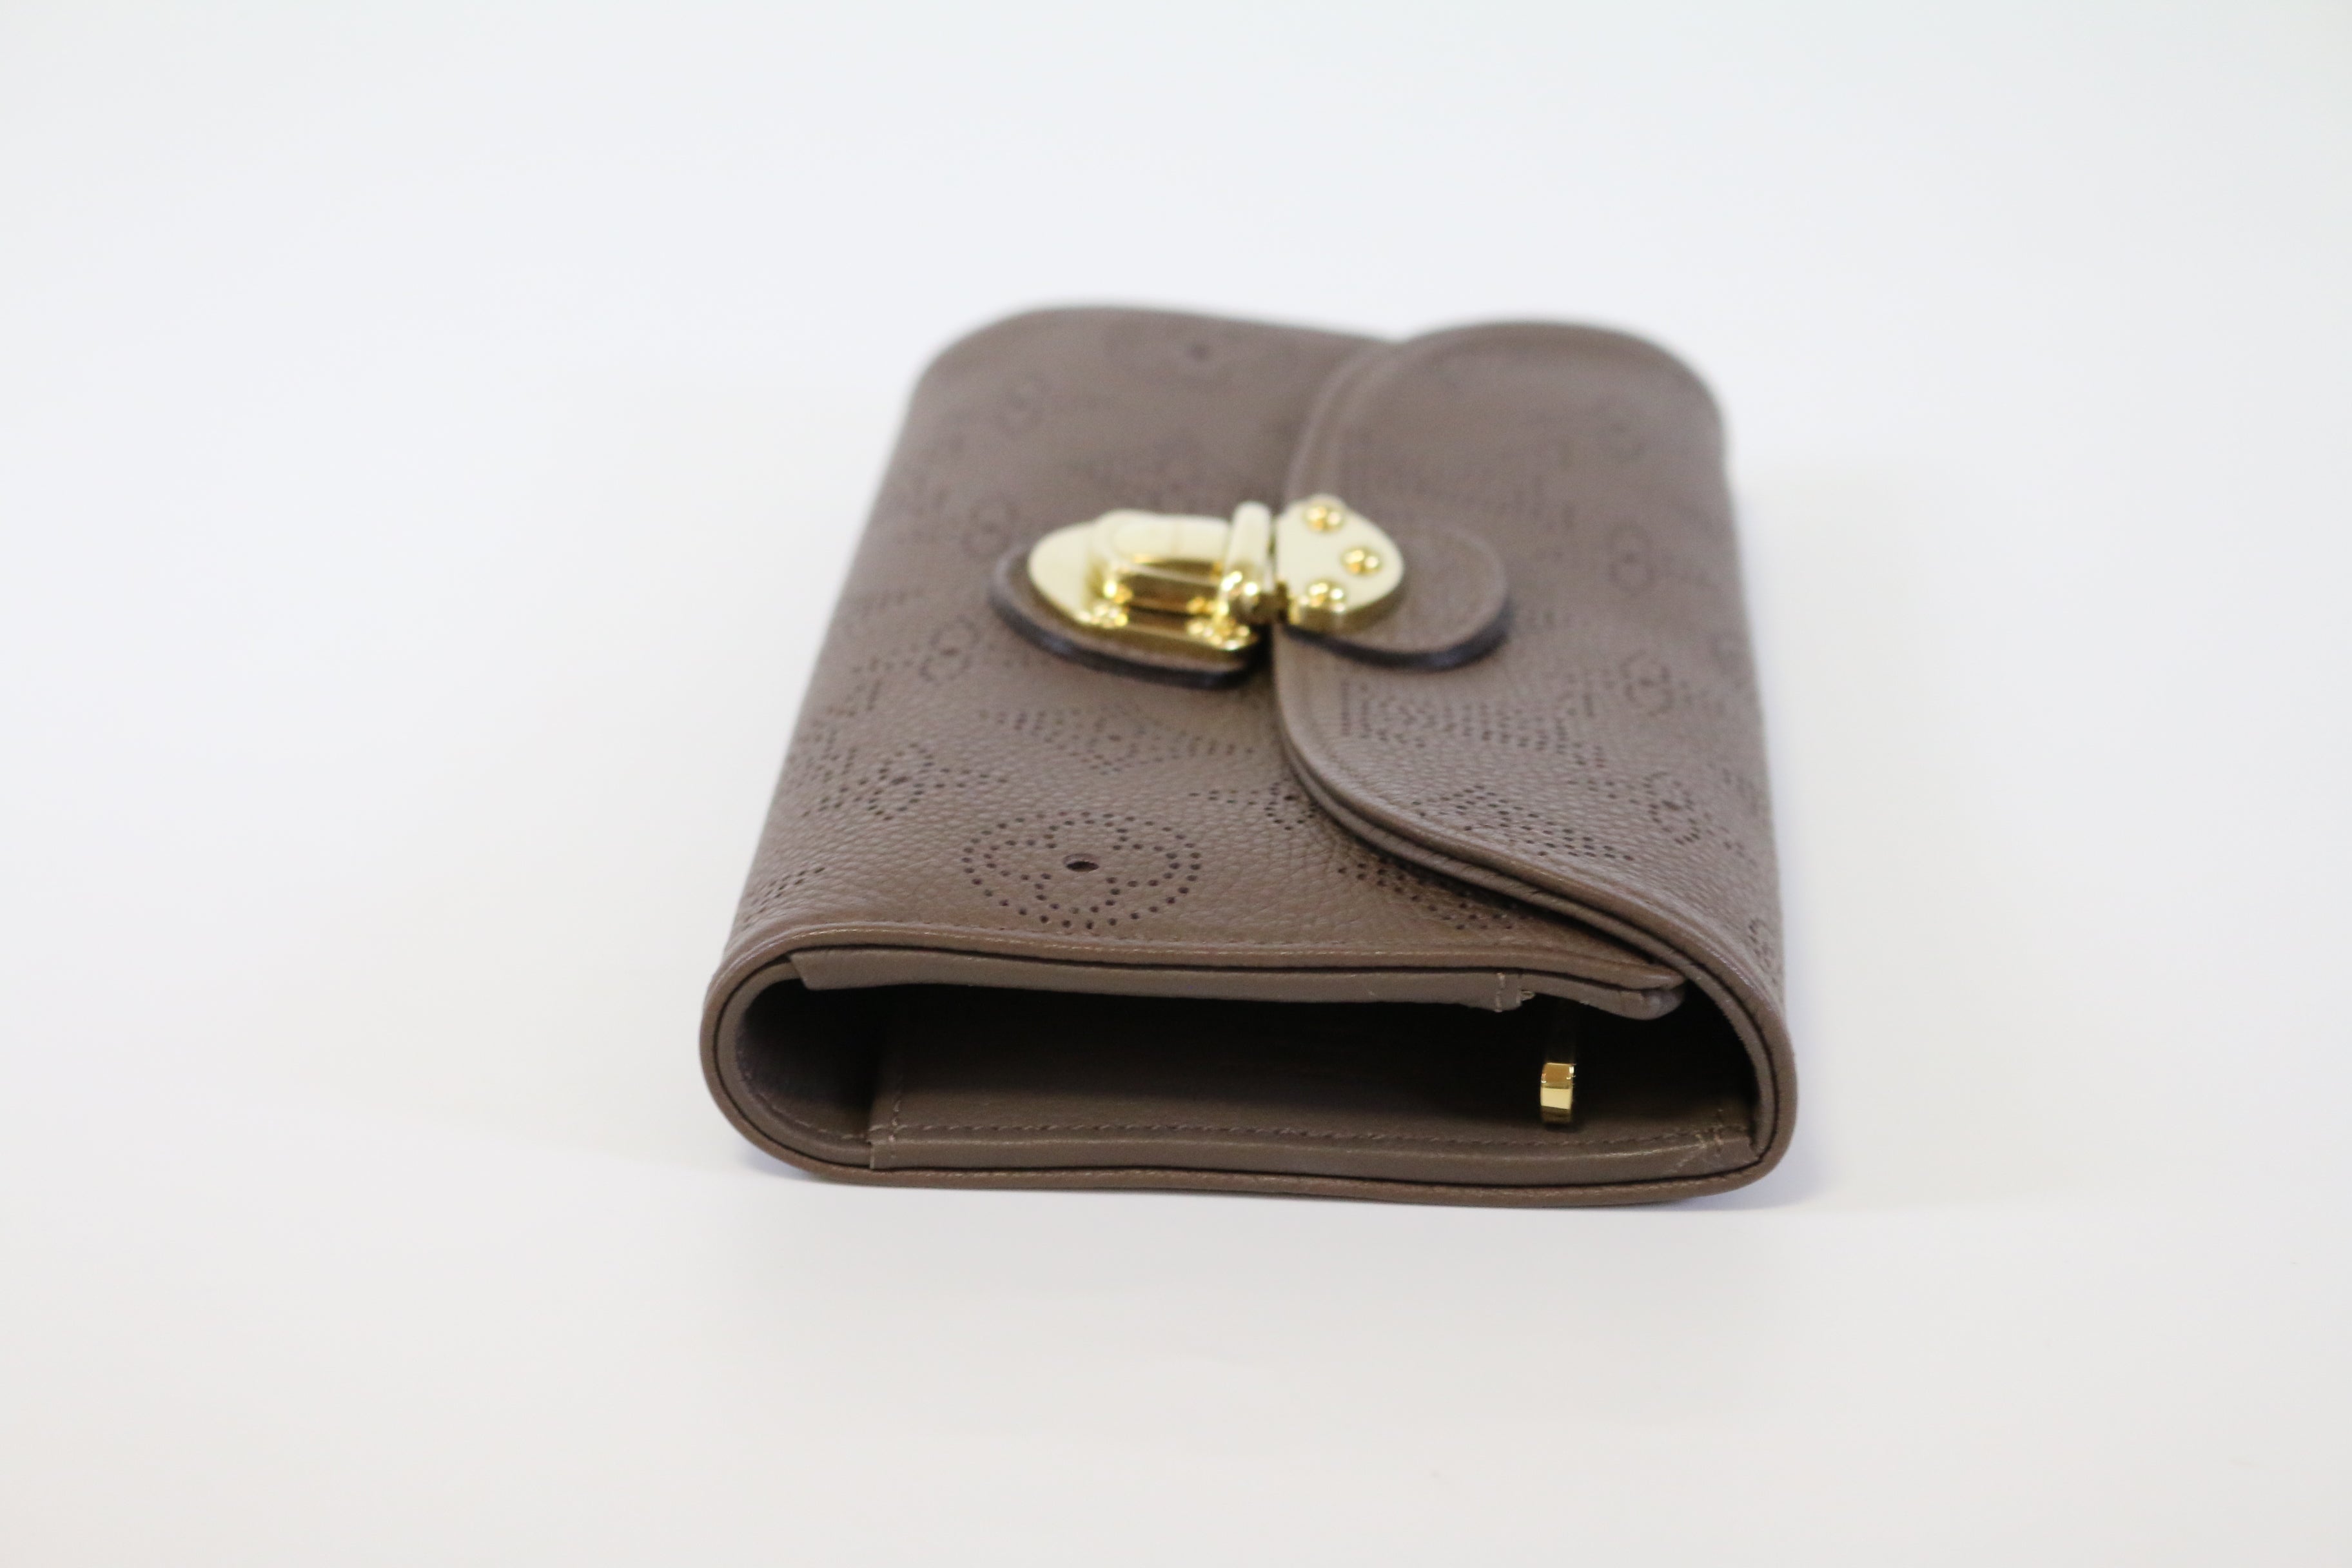 Louis Vuitton Portefeuille Amelia Black Leather Wallet (Pre-Owned)